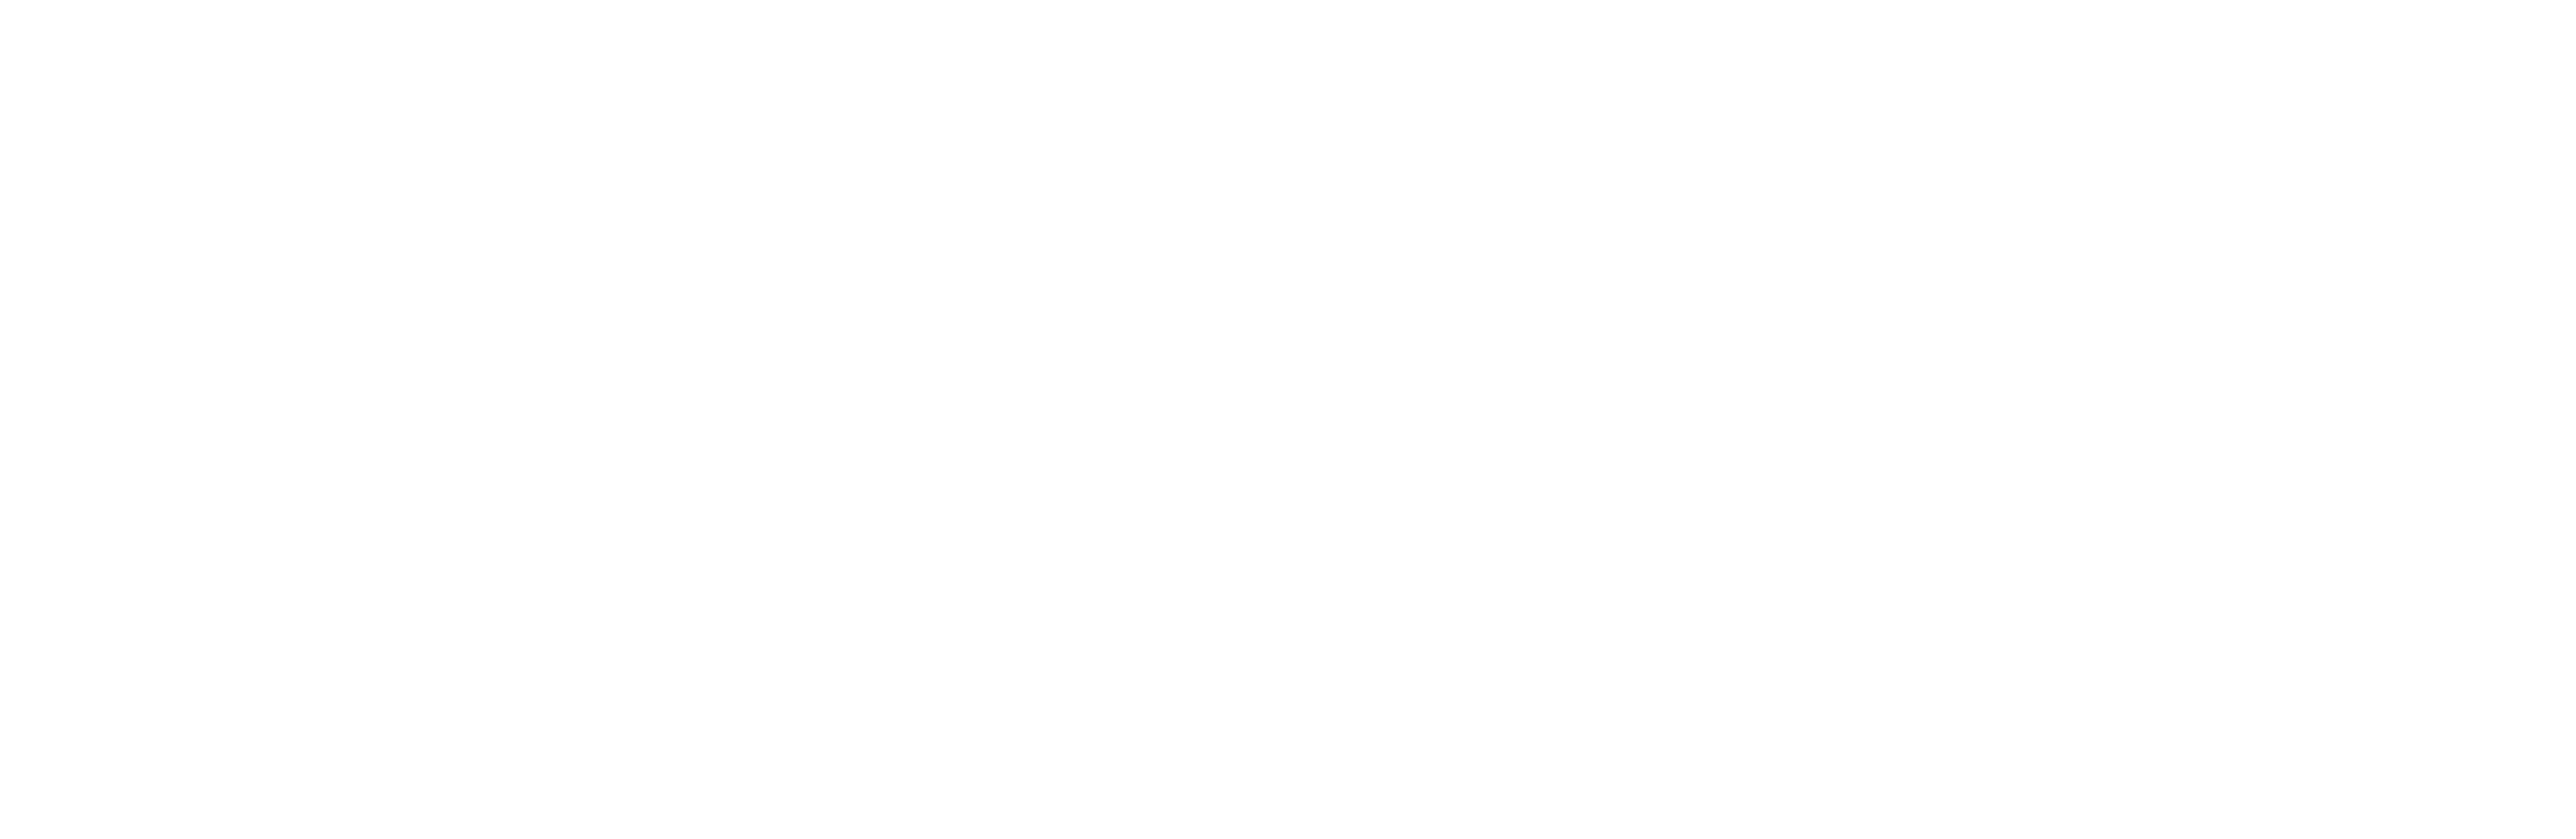 Beach U19 World Championships 2021